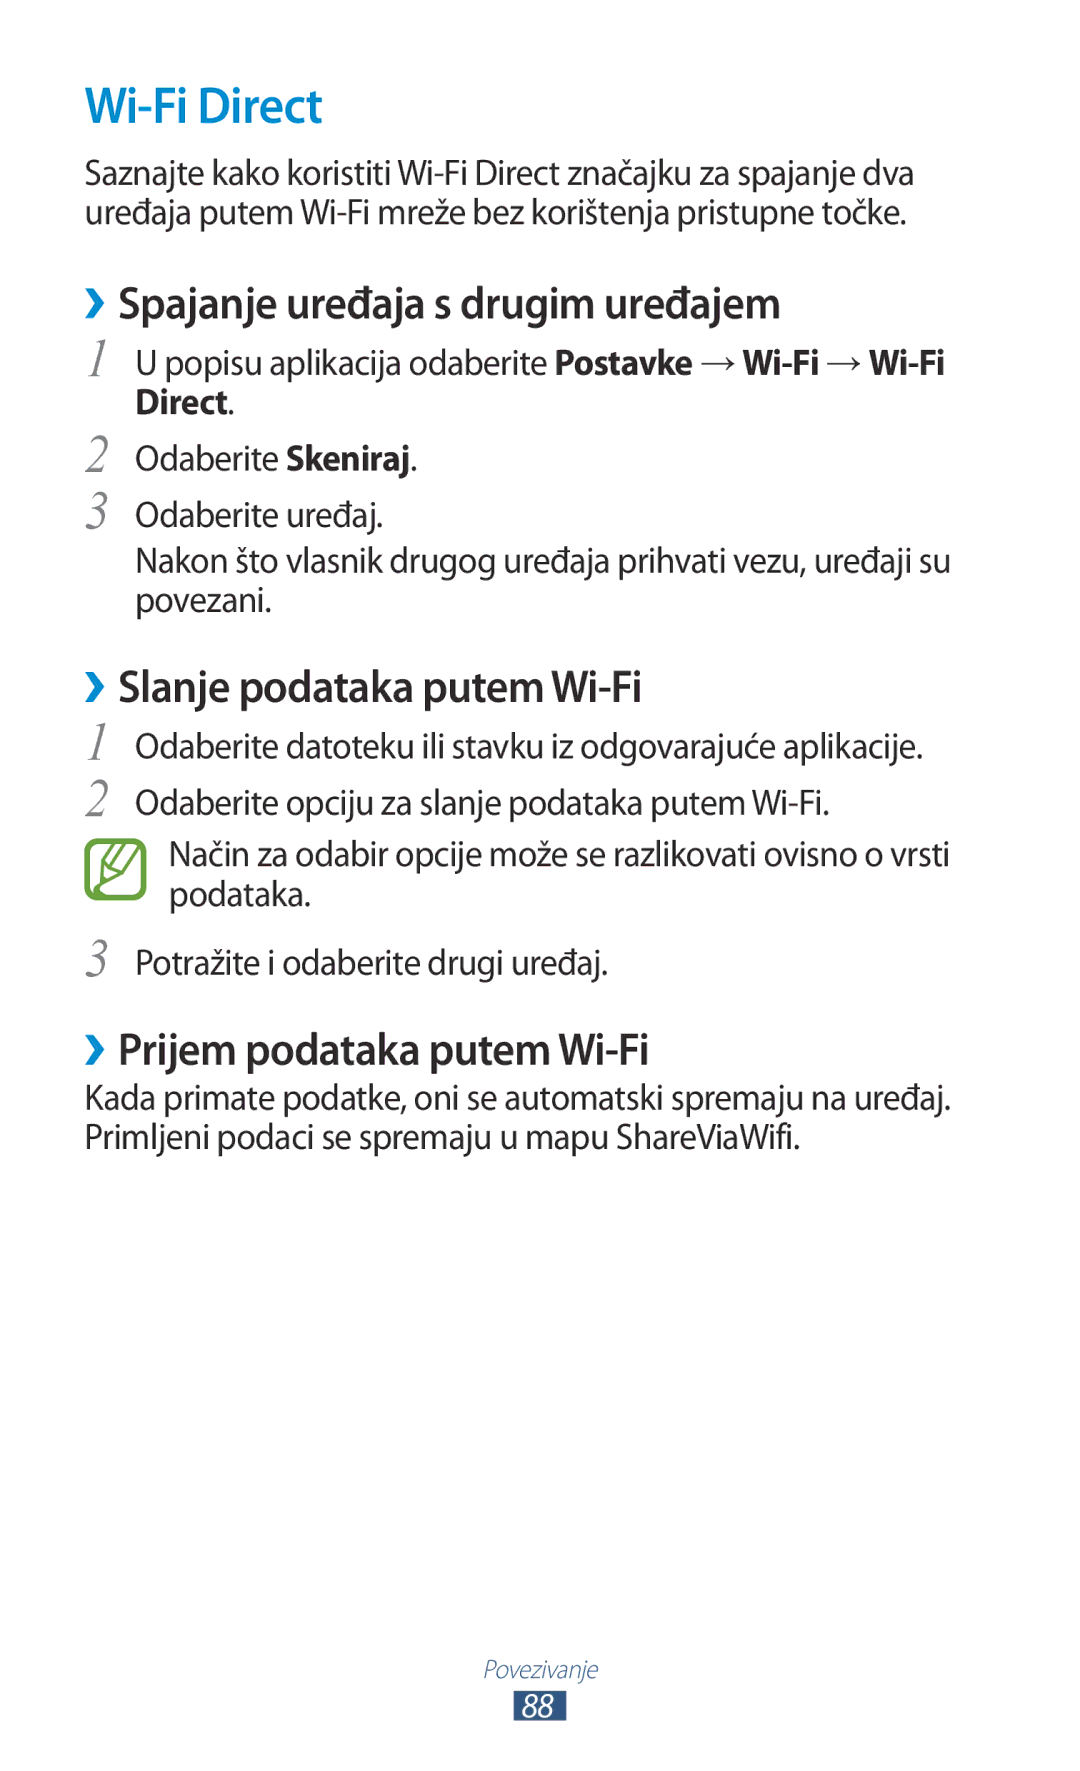 Samsung GT-P3110TSETRA, GT-P3110TSATRA Wi-Fi Direct, ››Spajanje uređaja s drugim uređajem, ››Slanje podataka putem Wi-Fi 